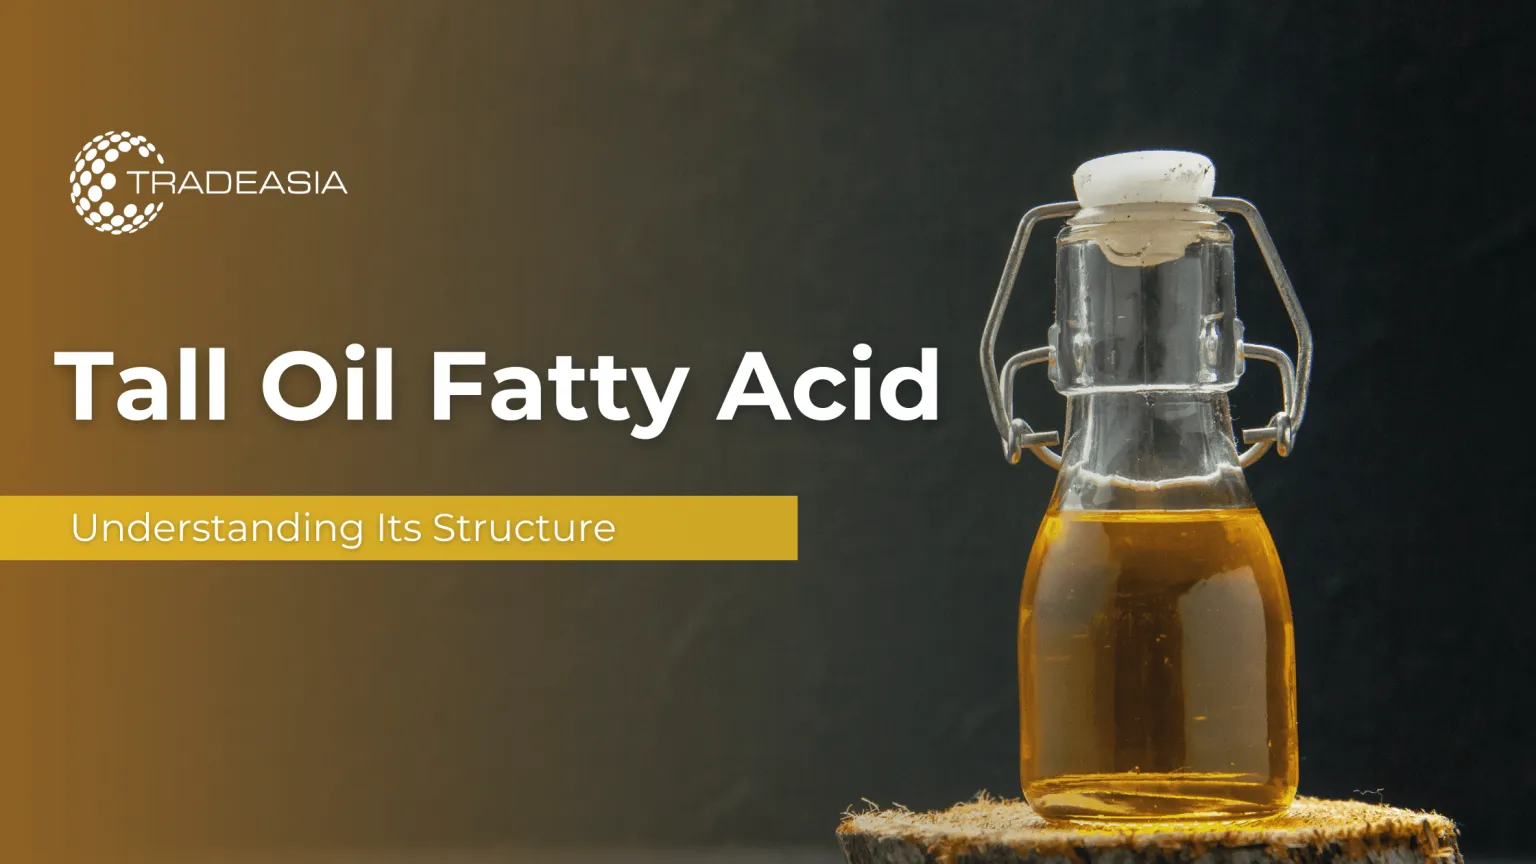 Tail Oil Fatty Acid in Tradeasia